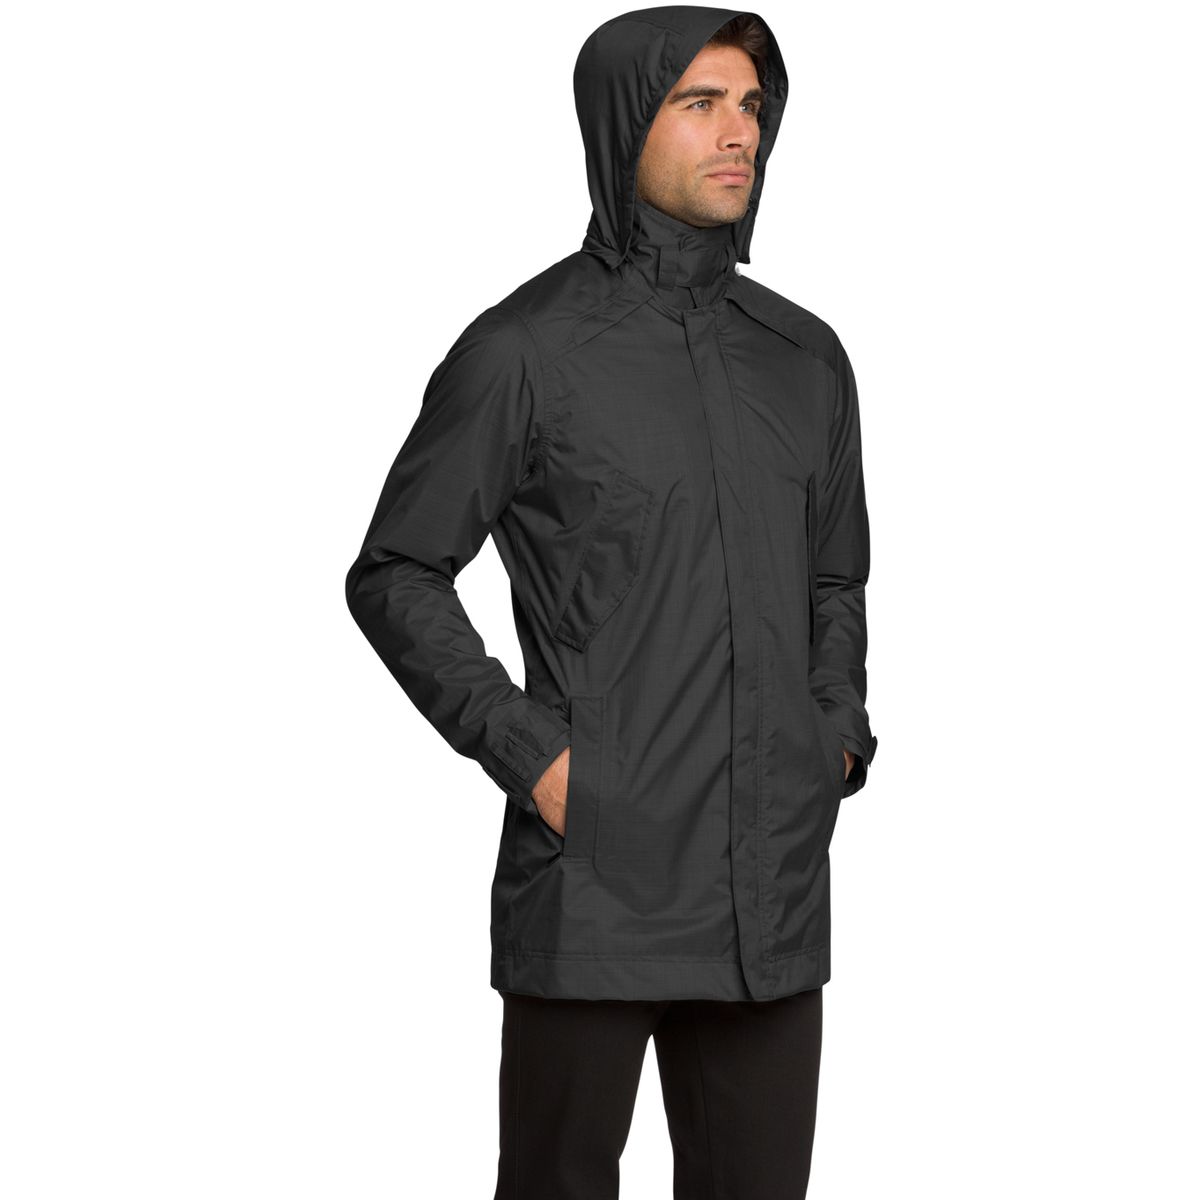 NAU Succinct Trench Coat - Men's - Clothing